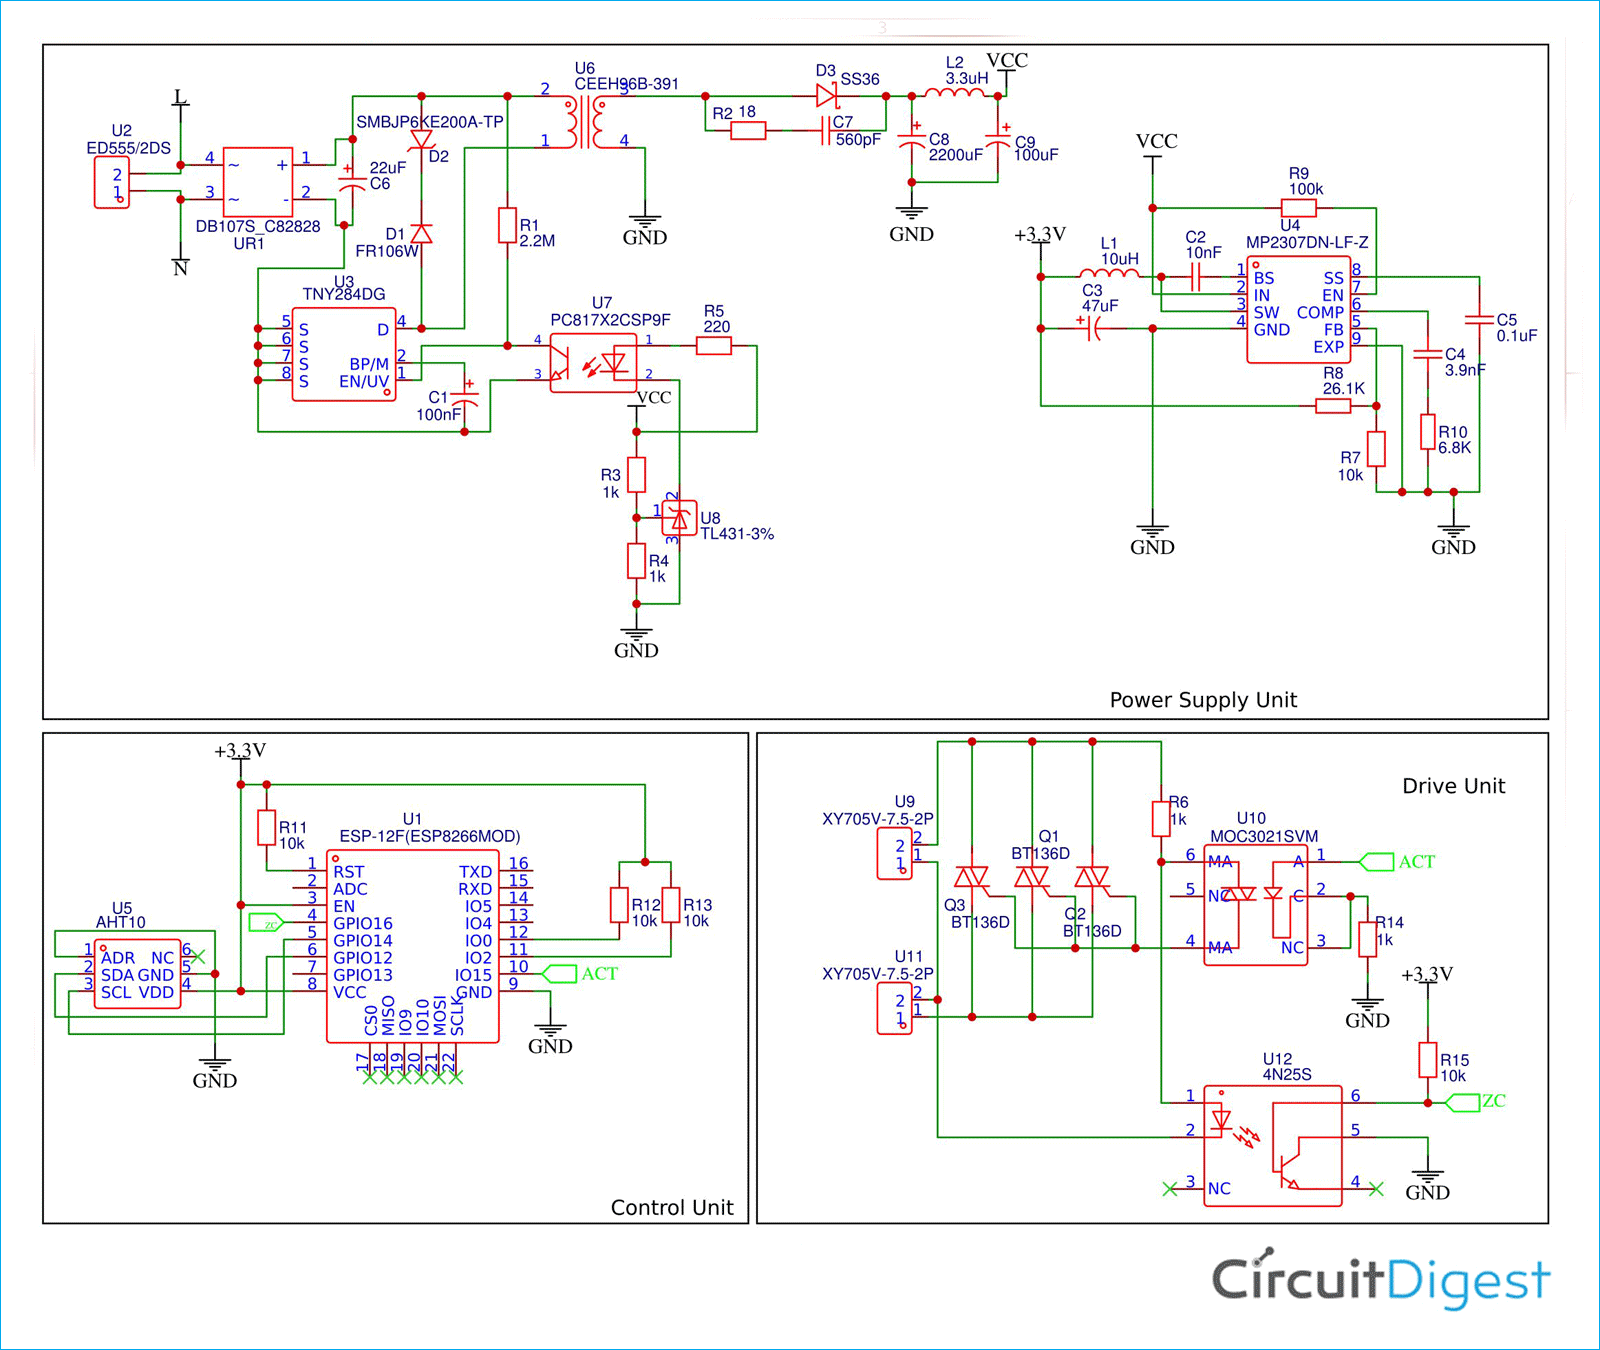 Smart Air Cooler Controller Circuit Diagram